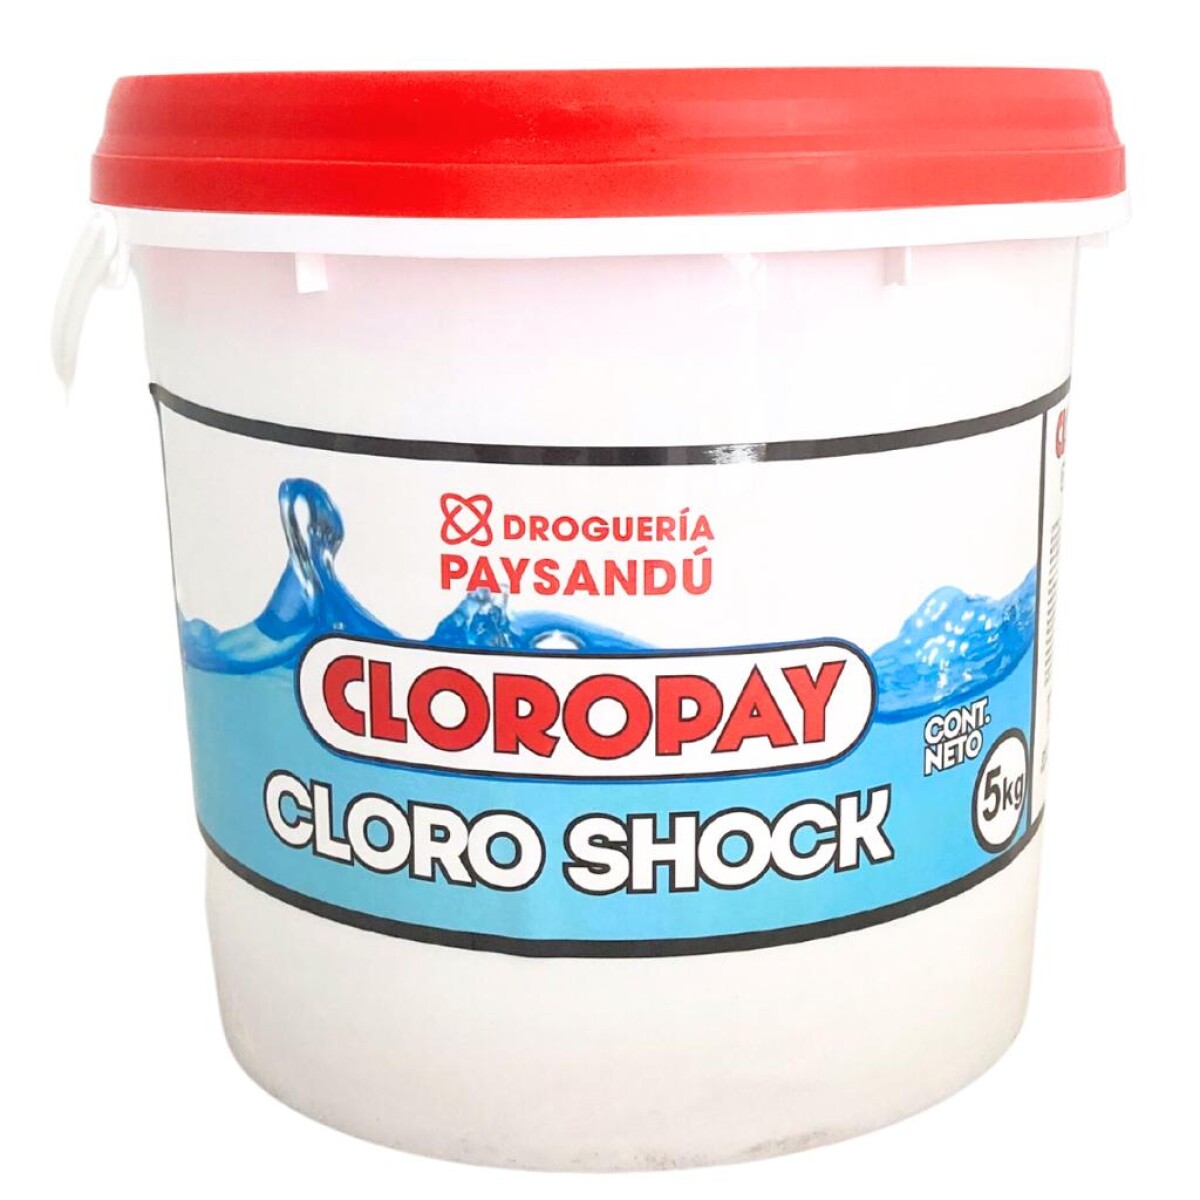 Cloropay Cloroshock polvo - 5 Kg 